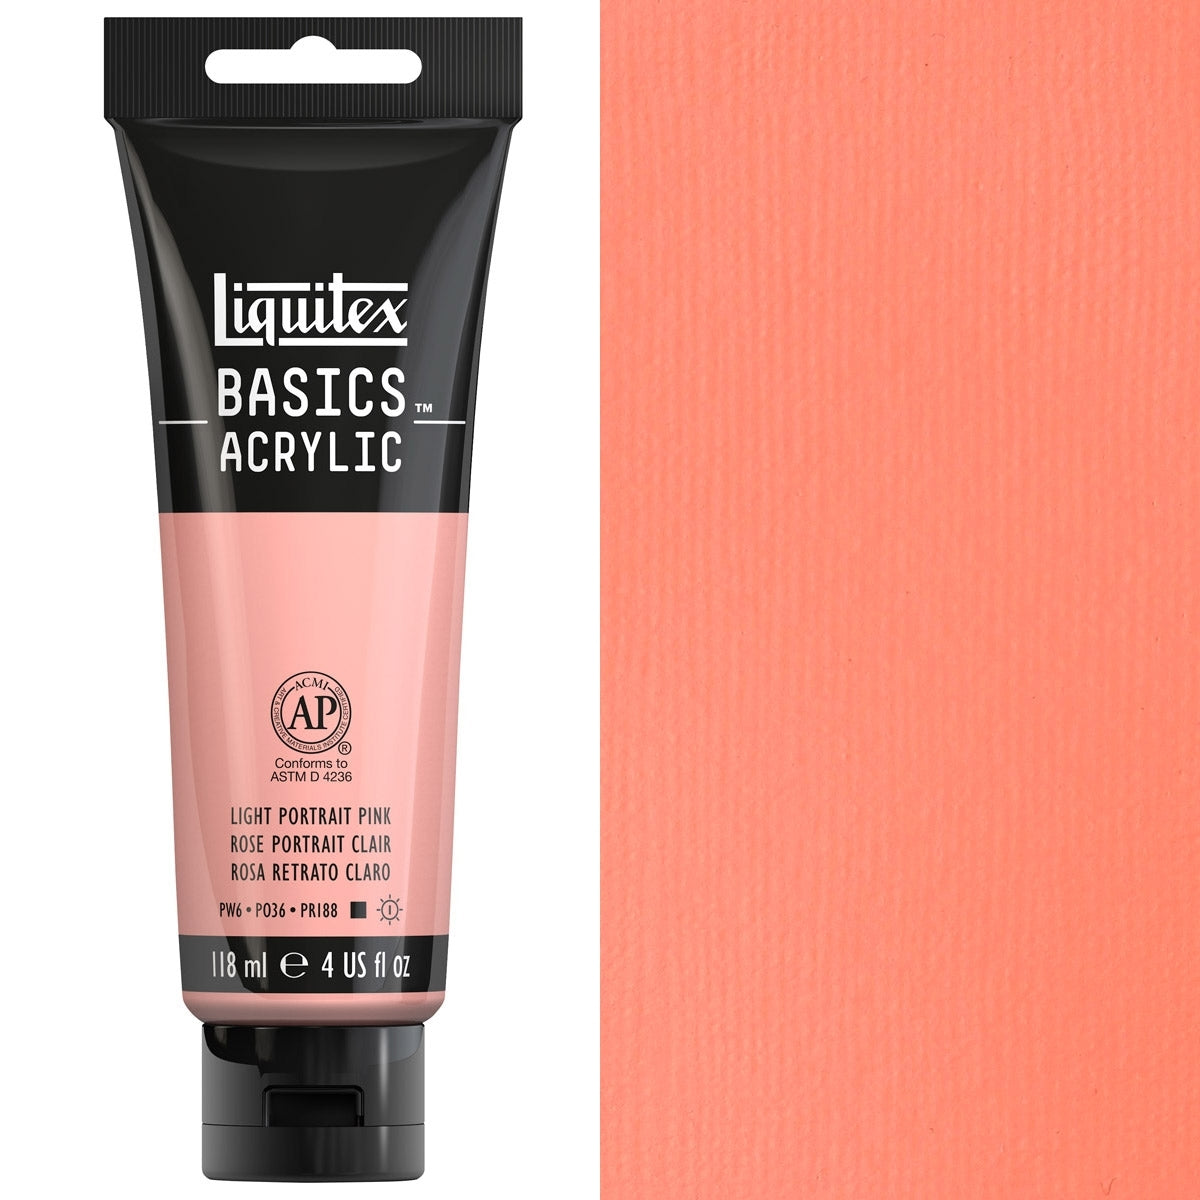 Liquitex - Basics Acrylic Colour - 118ml - Light Portrait Pink